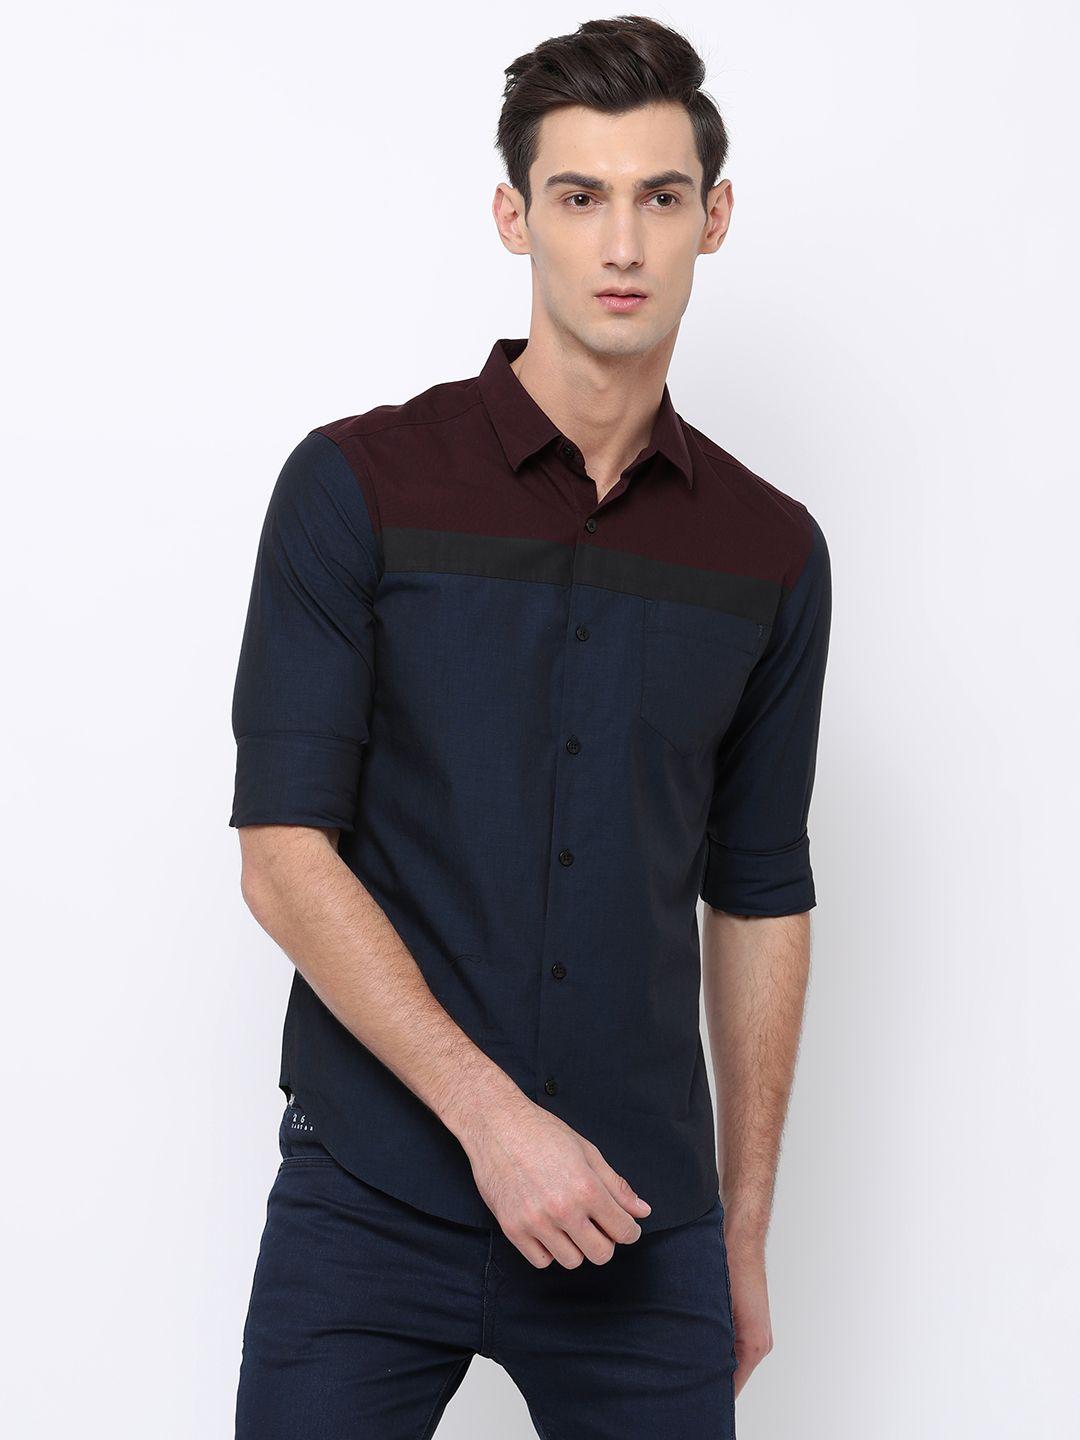 black coffee men navy blue & maroon slim fit solid casual shirt